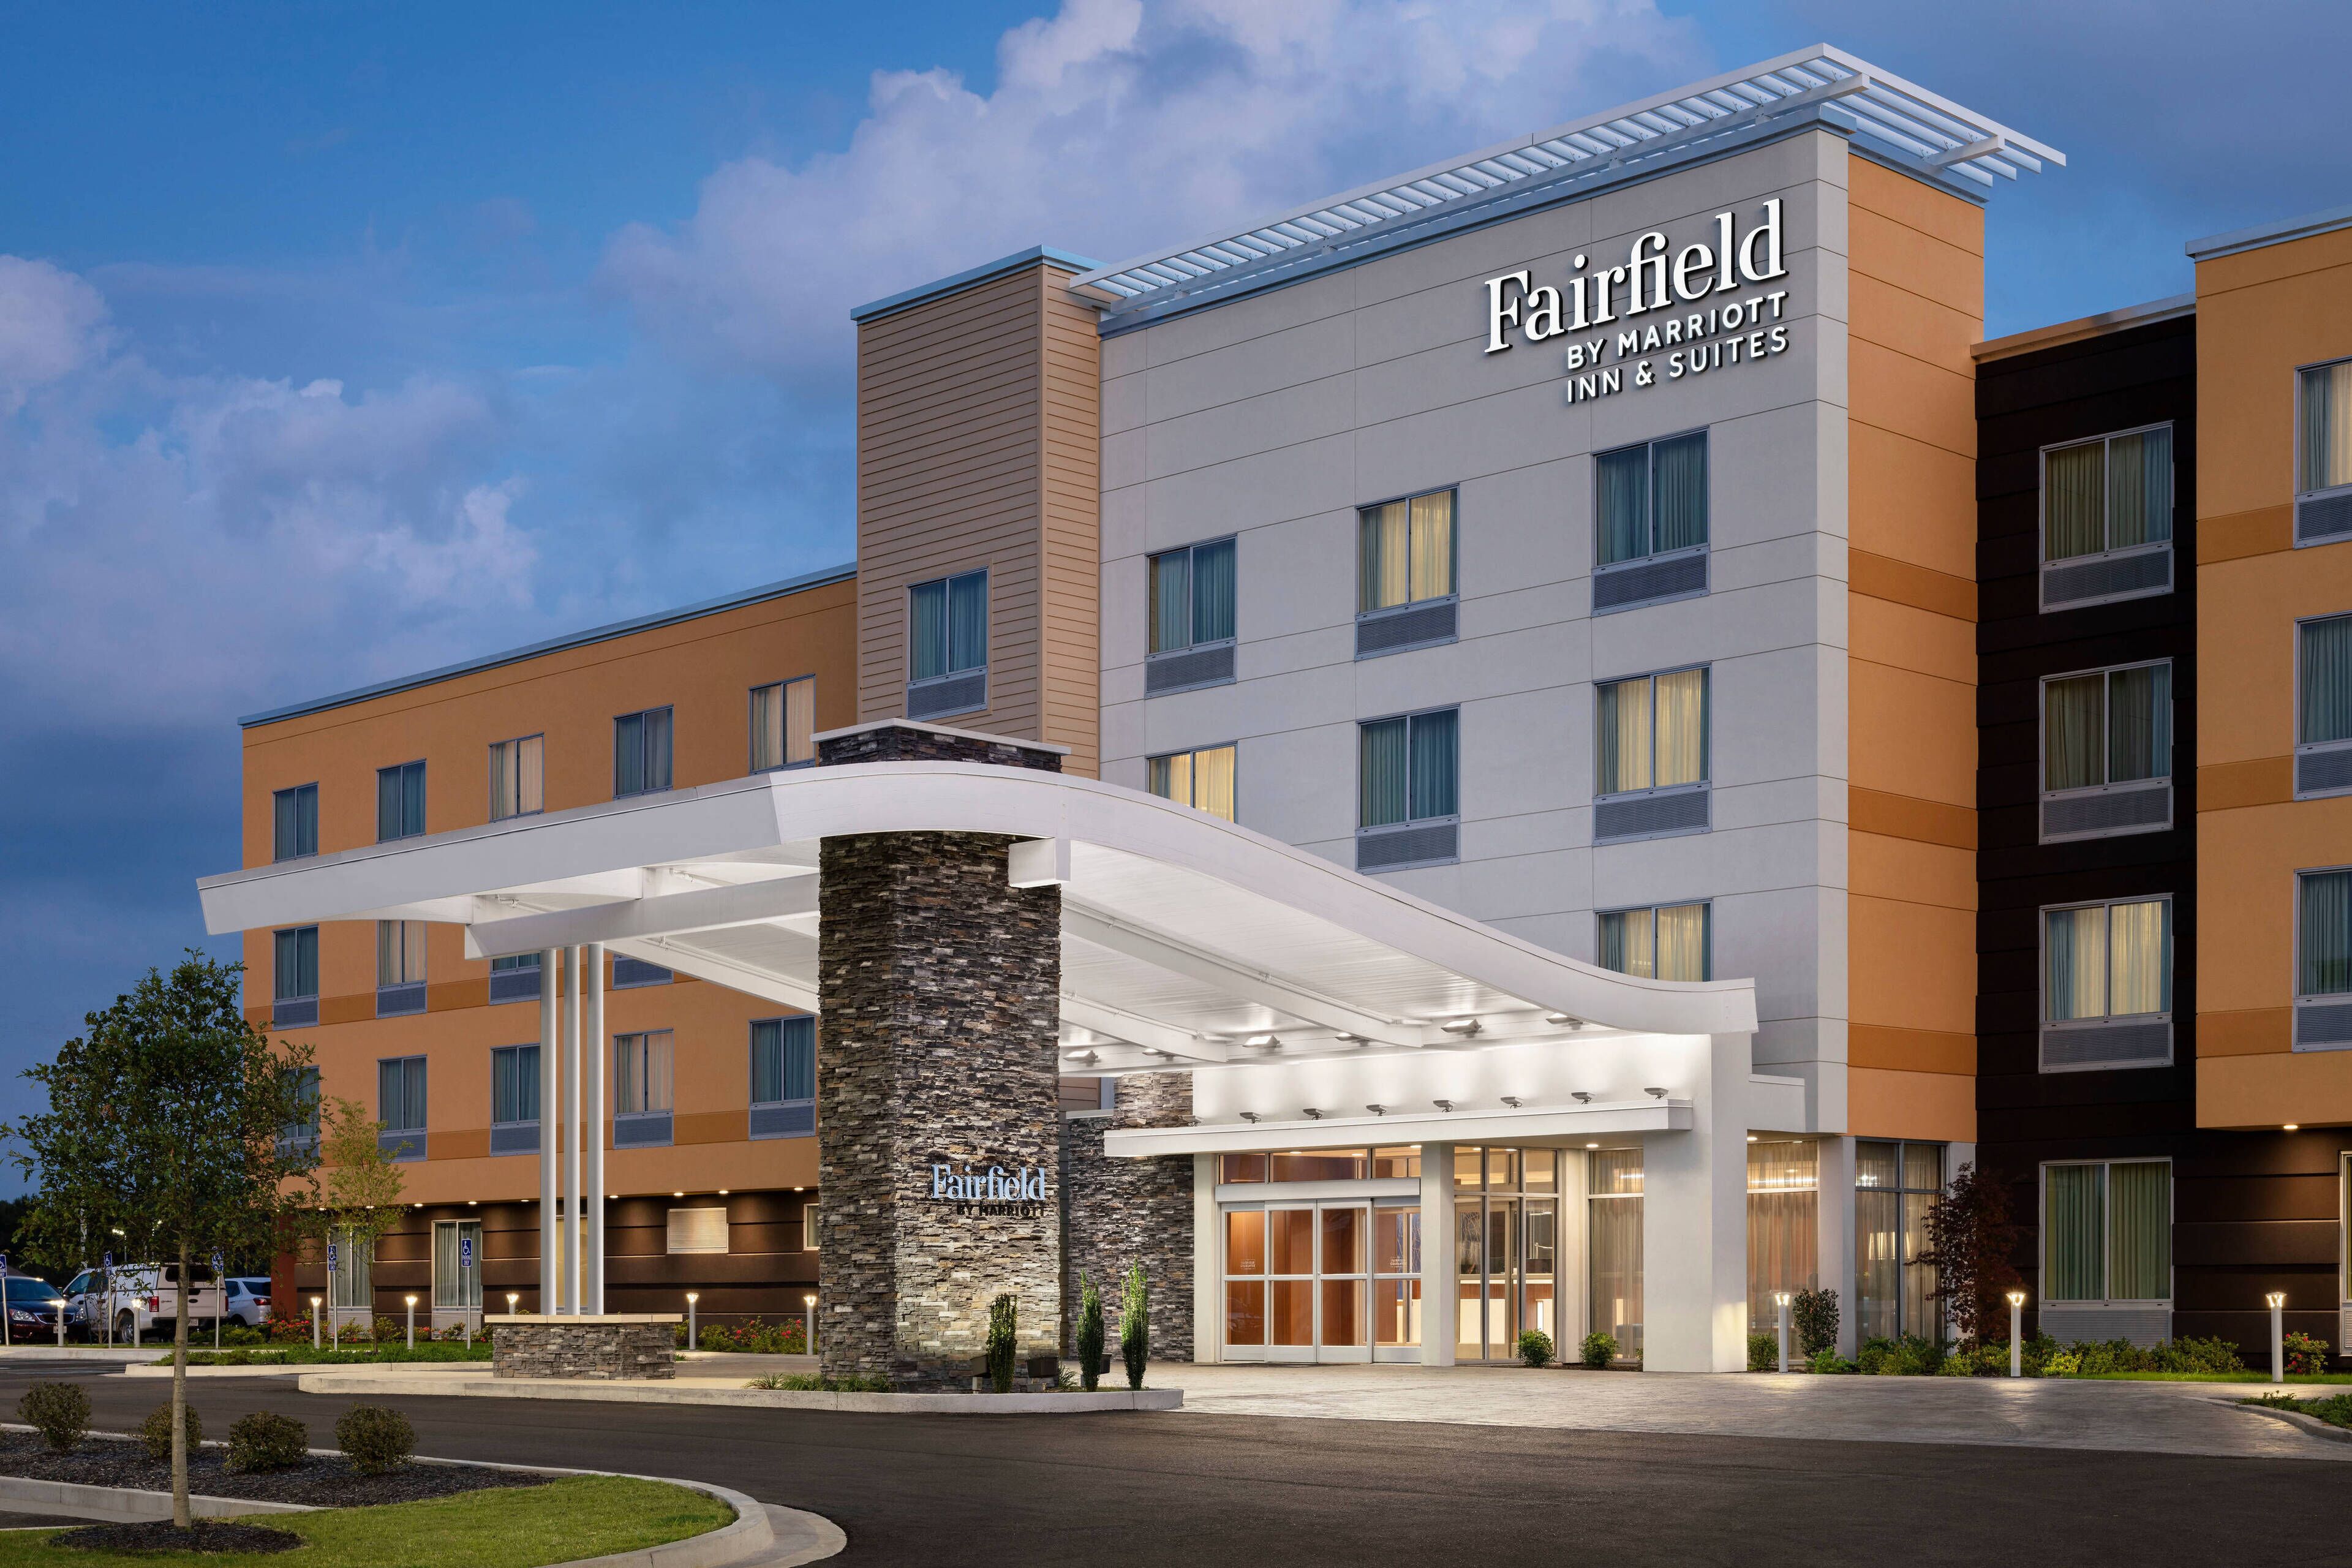 Fairfield Inn & Suites Batavia